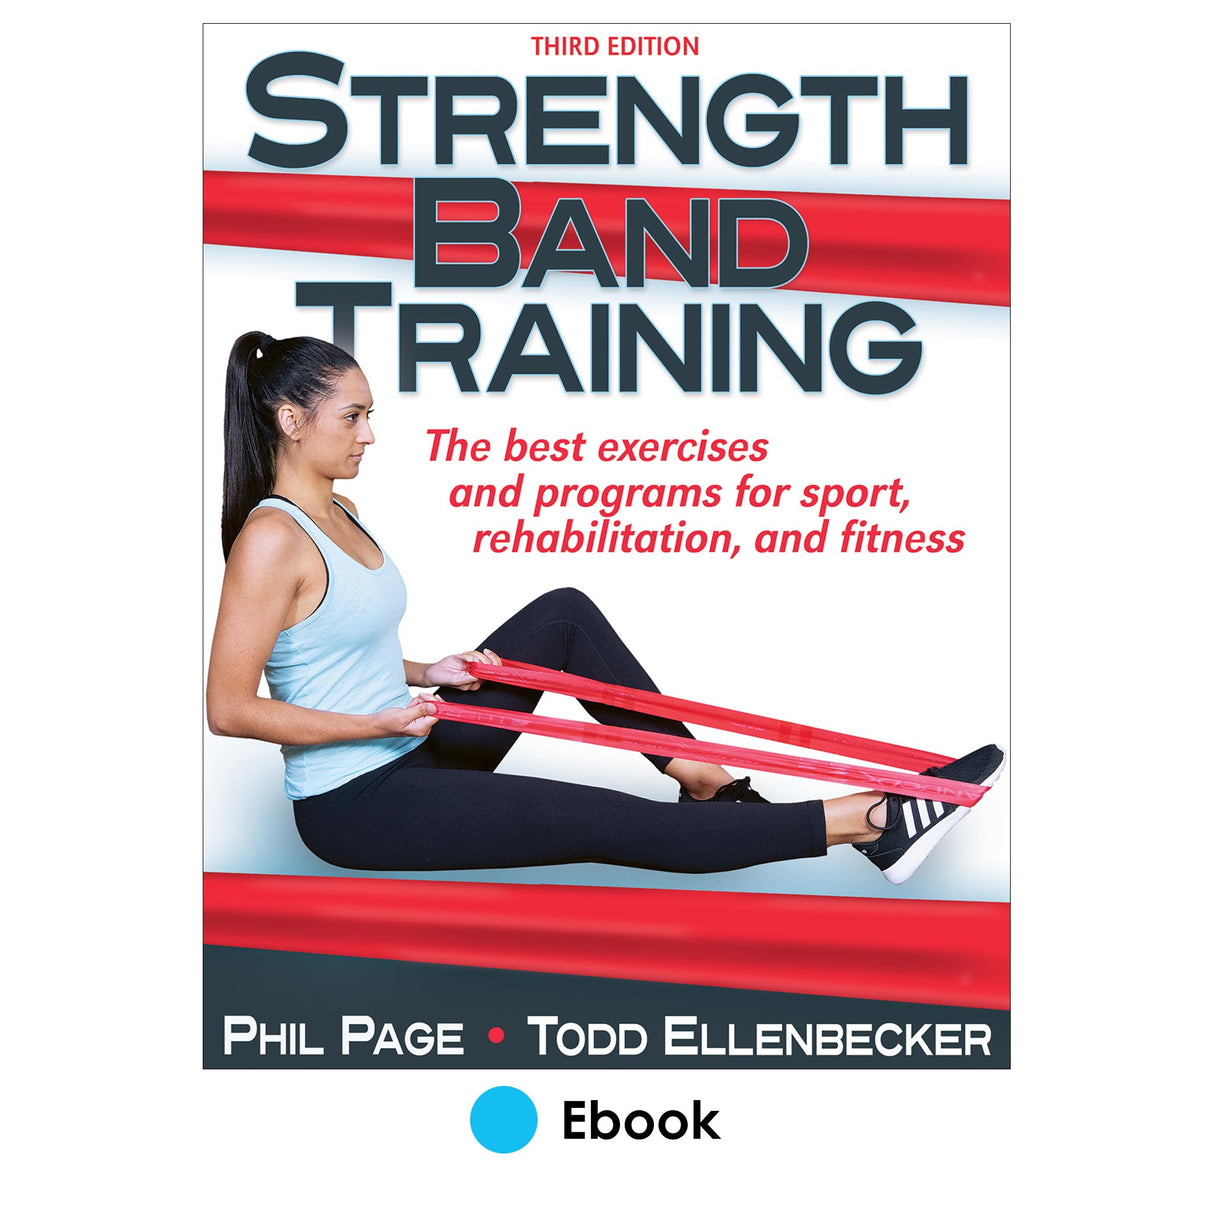 Strength Band Training 3rd Edition epub